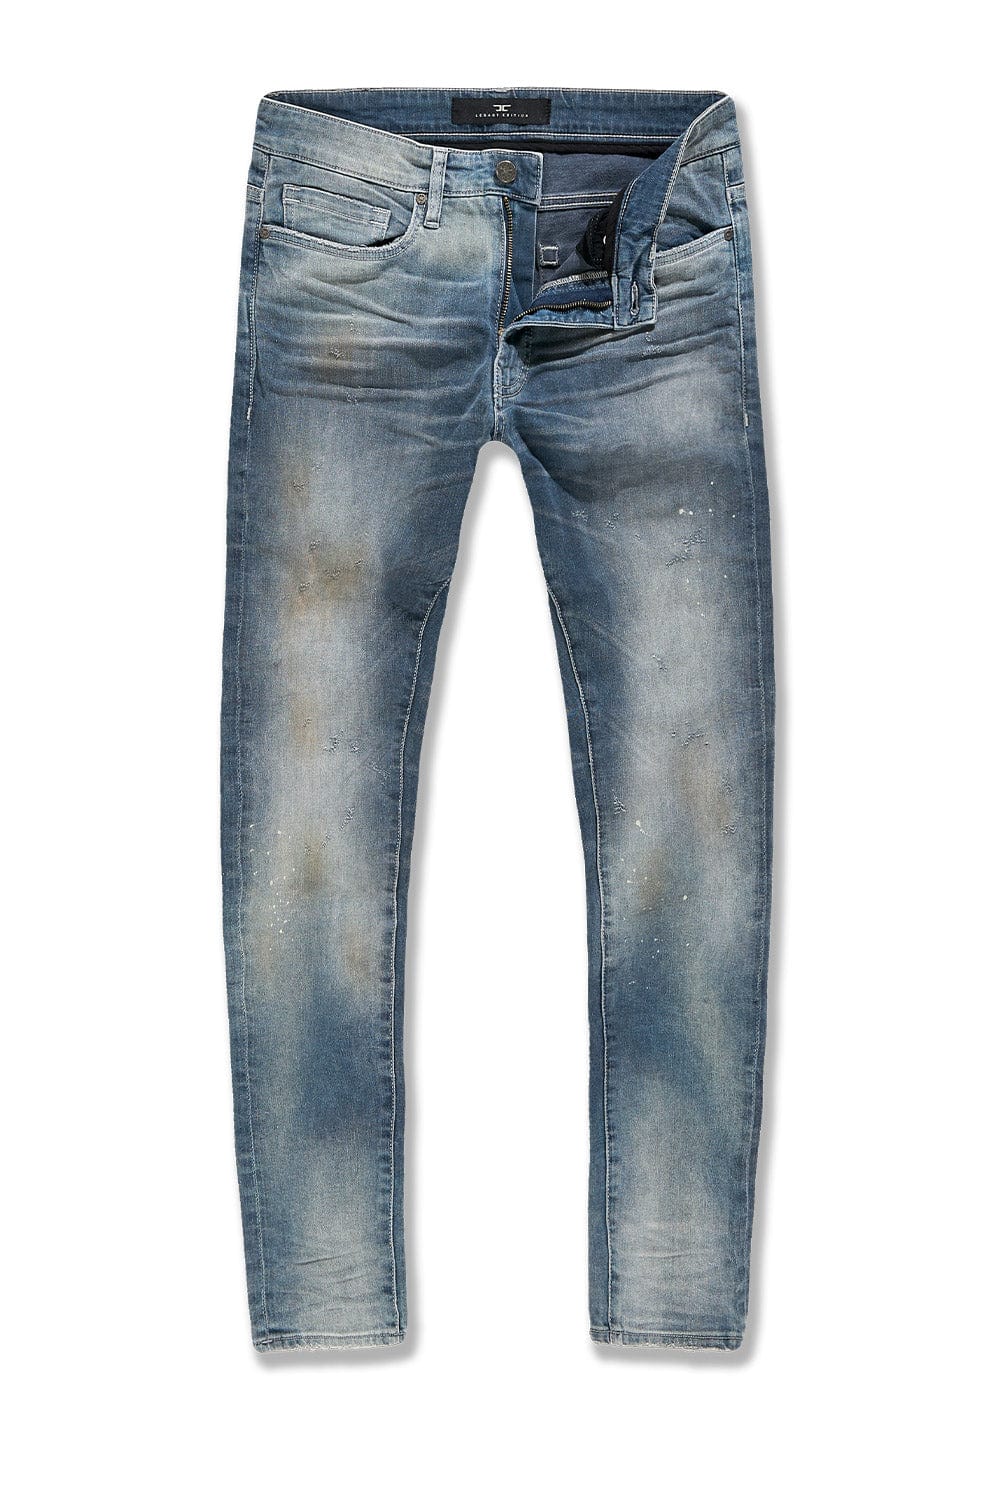 JC GERONIMO slim jeans Cooper Blue js1189